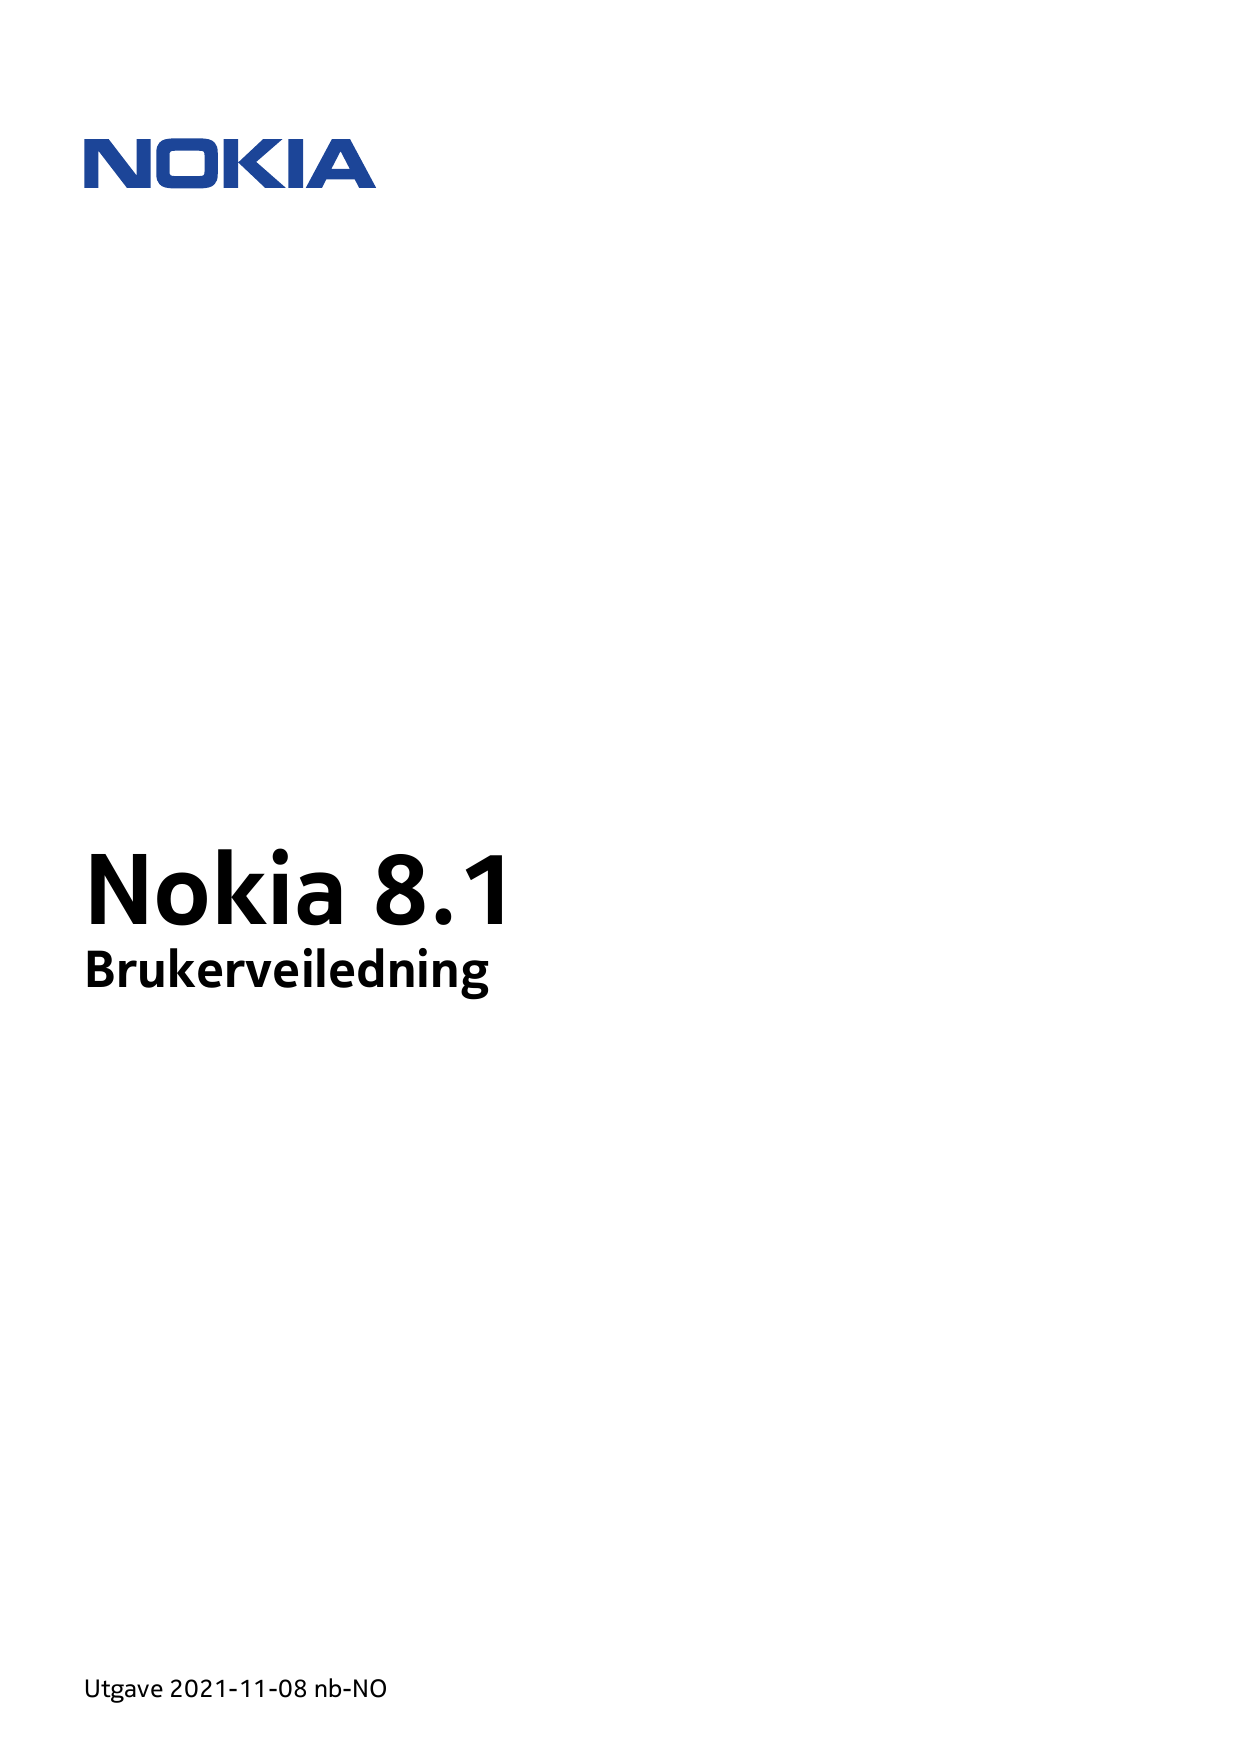 Nokia 8.1BrukerveiledningUtgave 2021-11-08 nb-NO